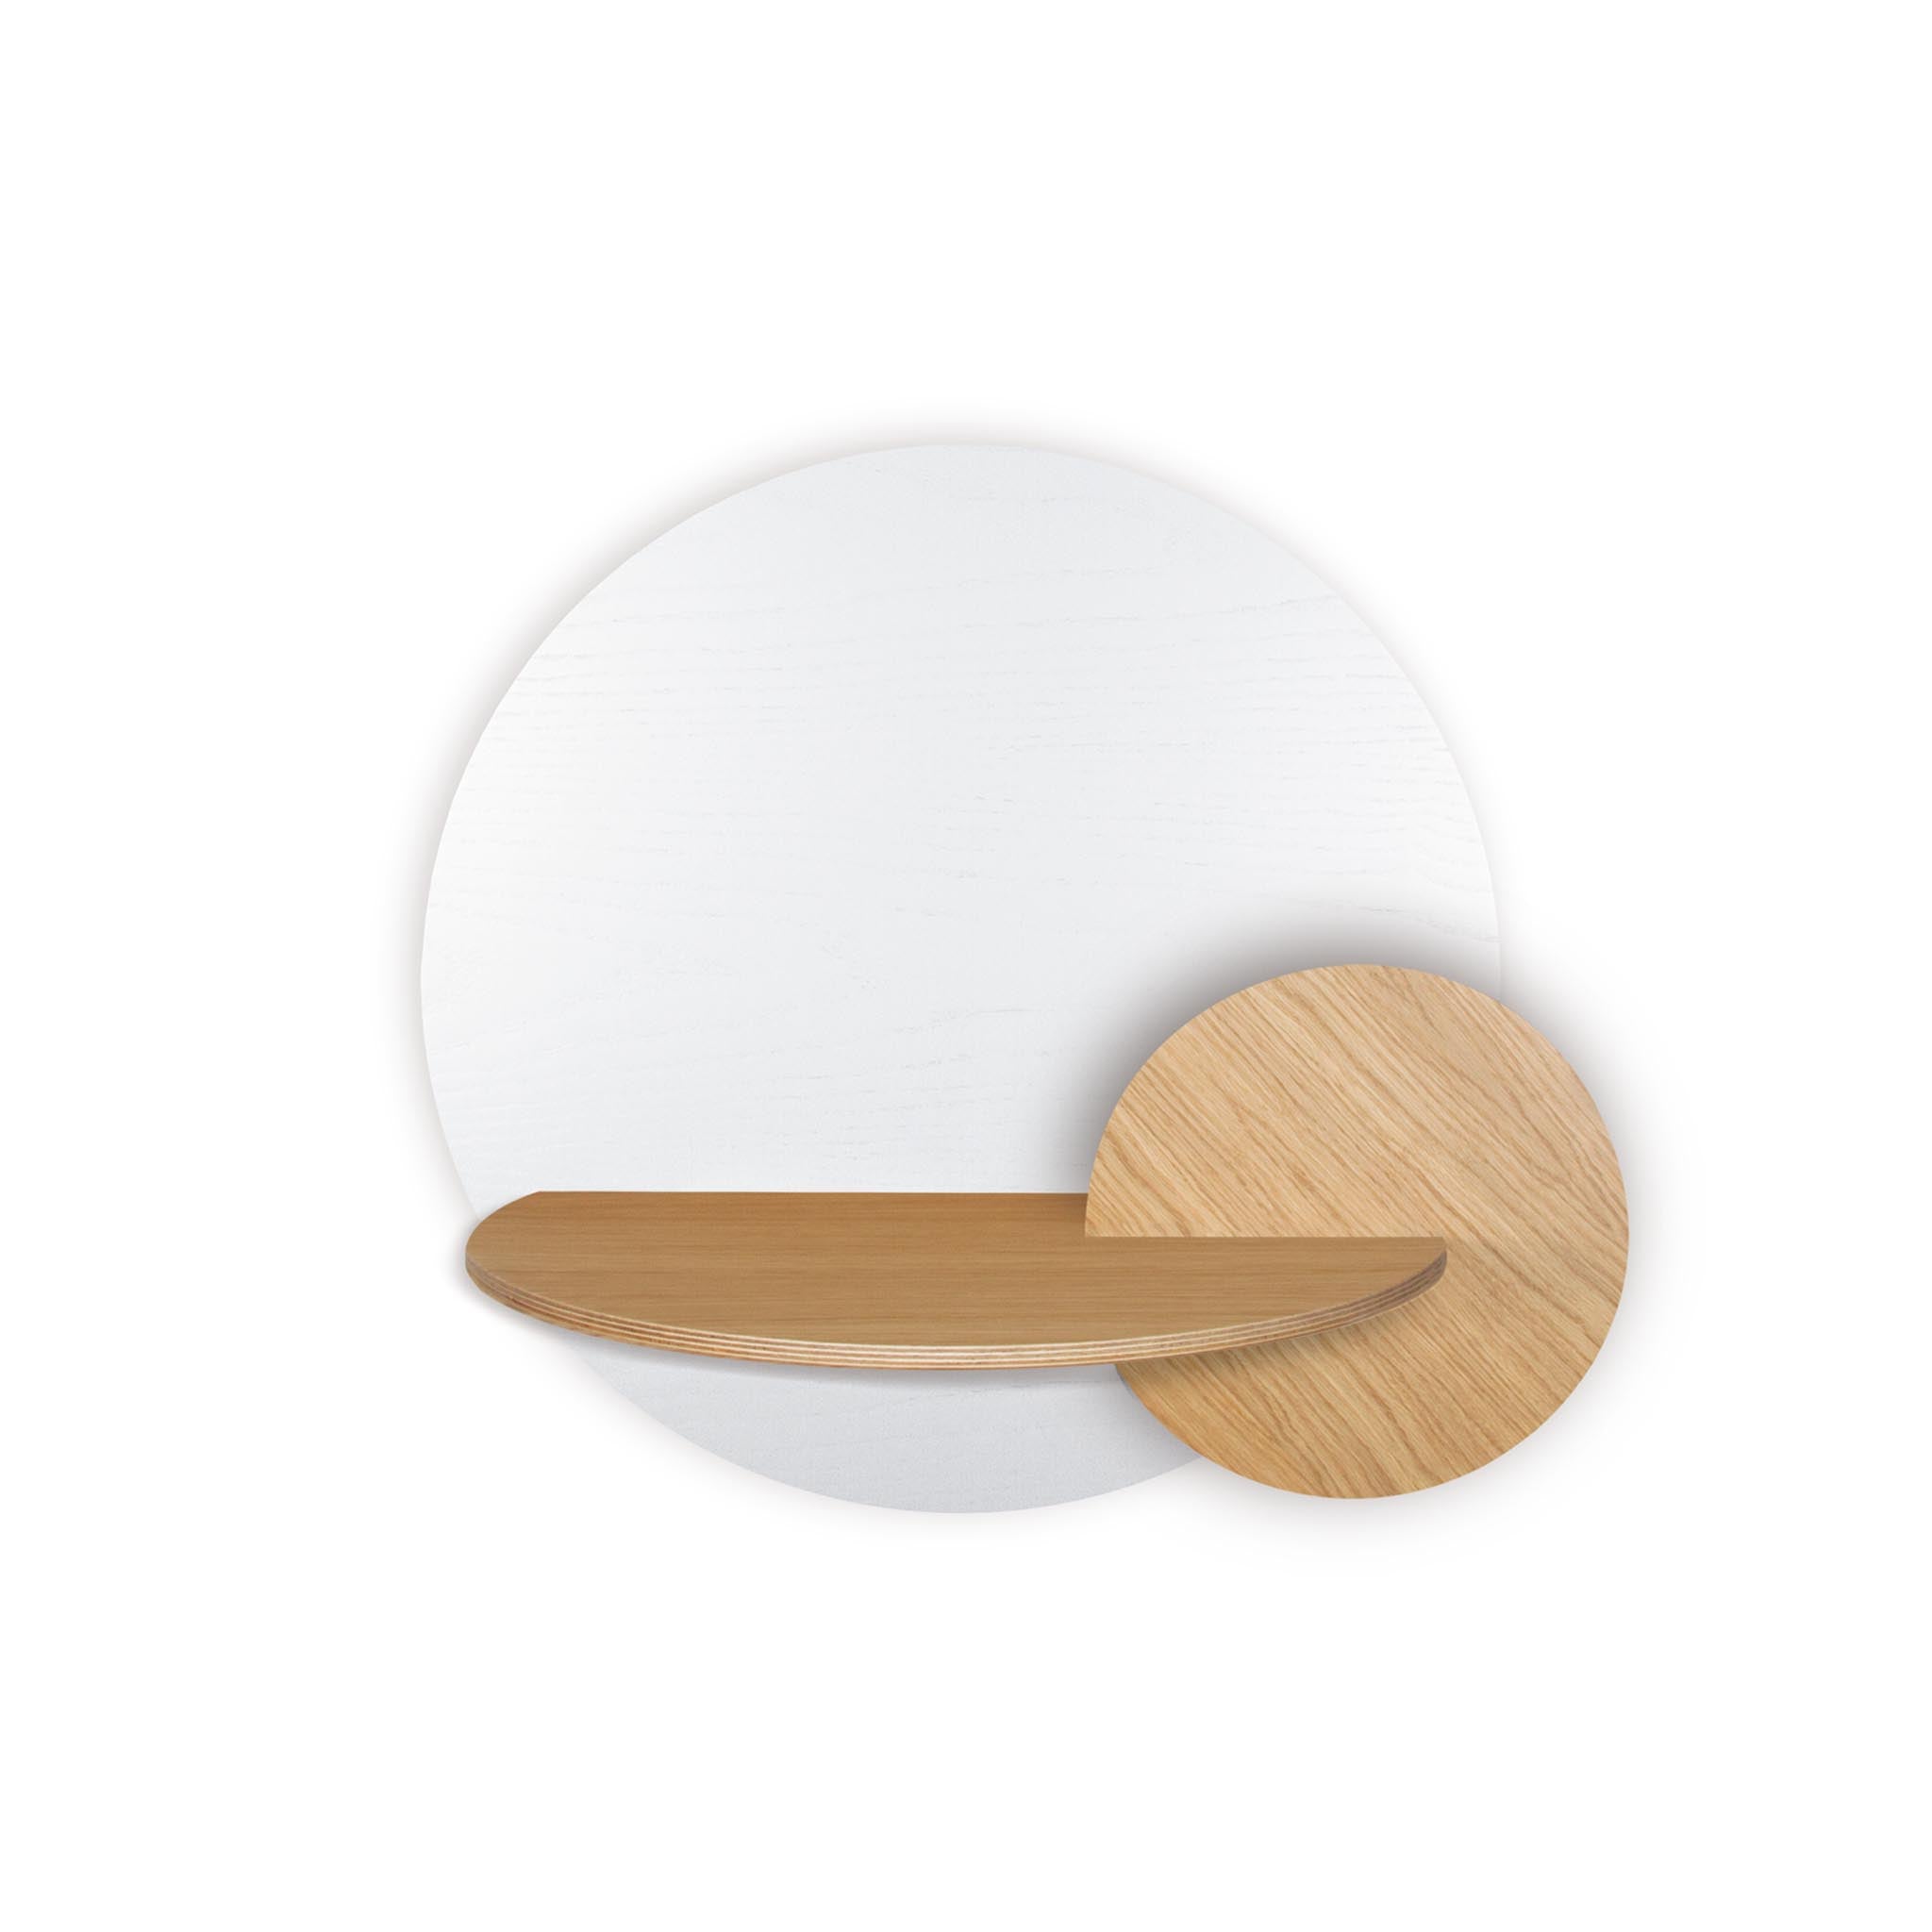 Alba floating nightstand · White circle